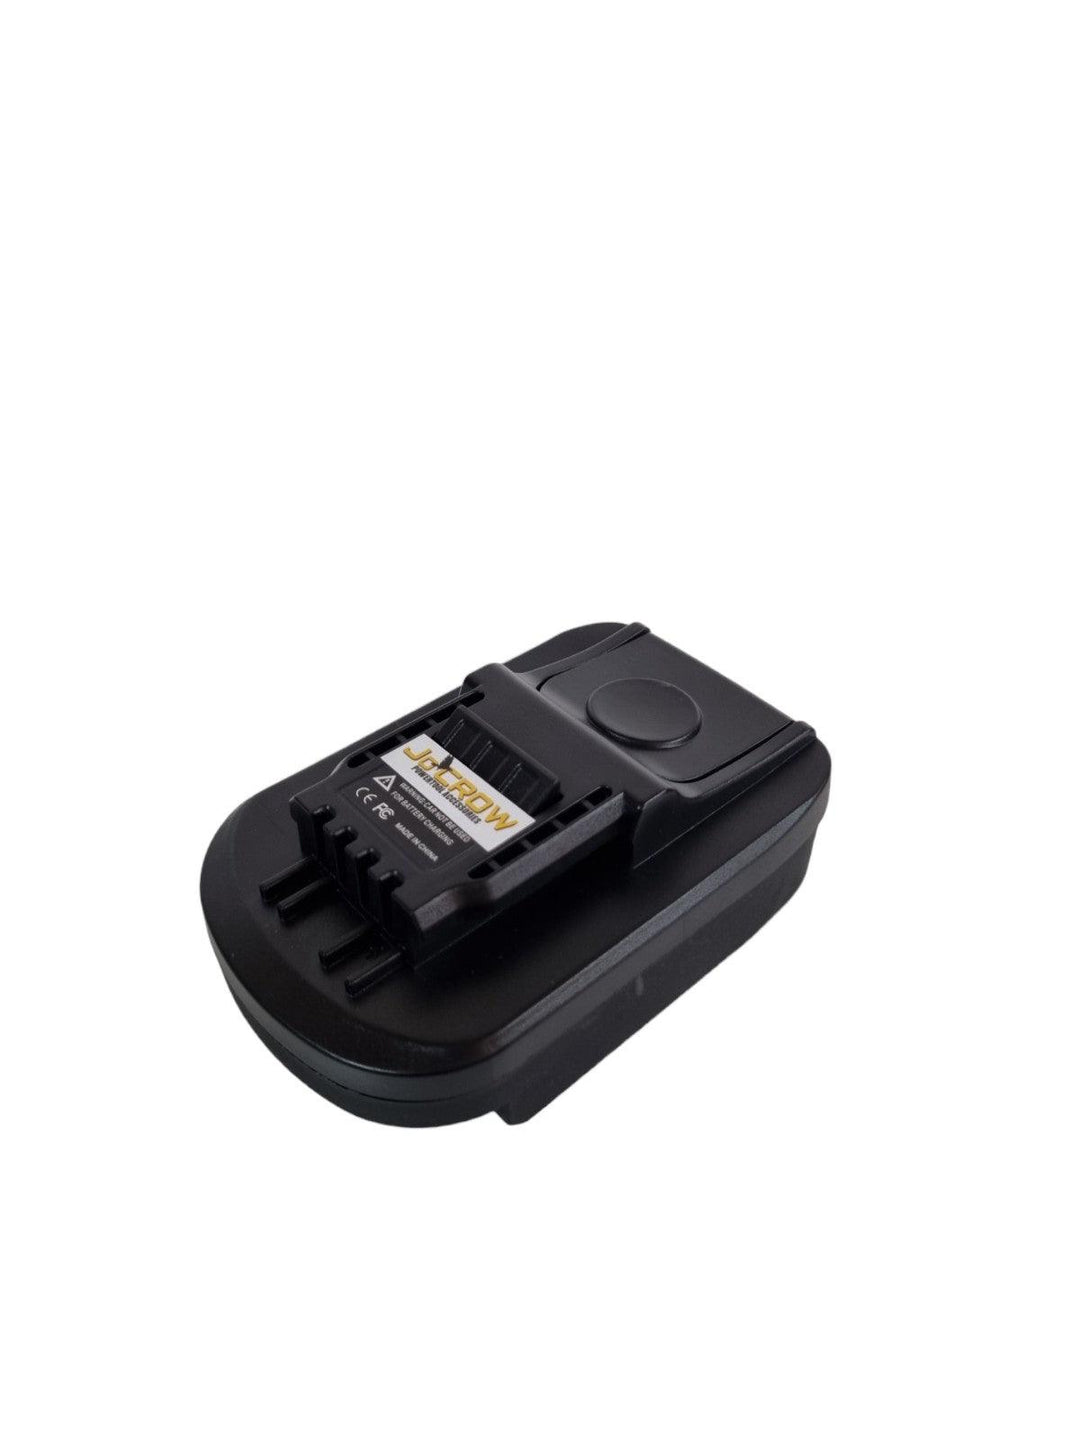 Adapter for BOSCH 18v Battery to WORX 18v Tools. - JoCROW PTY LTD